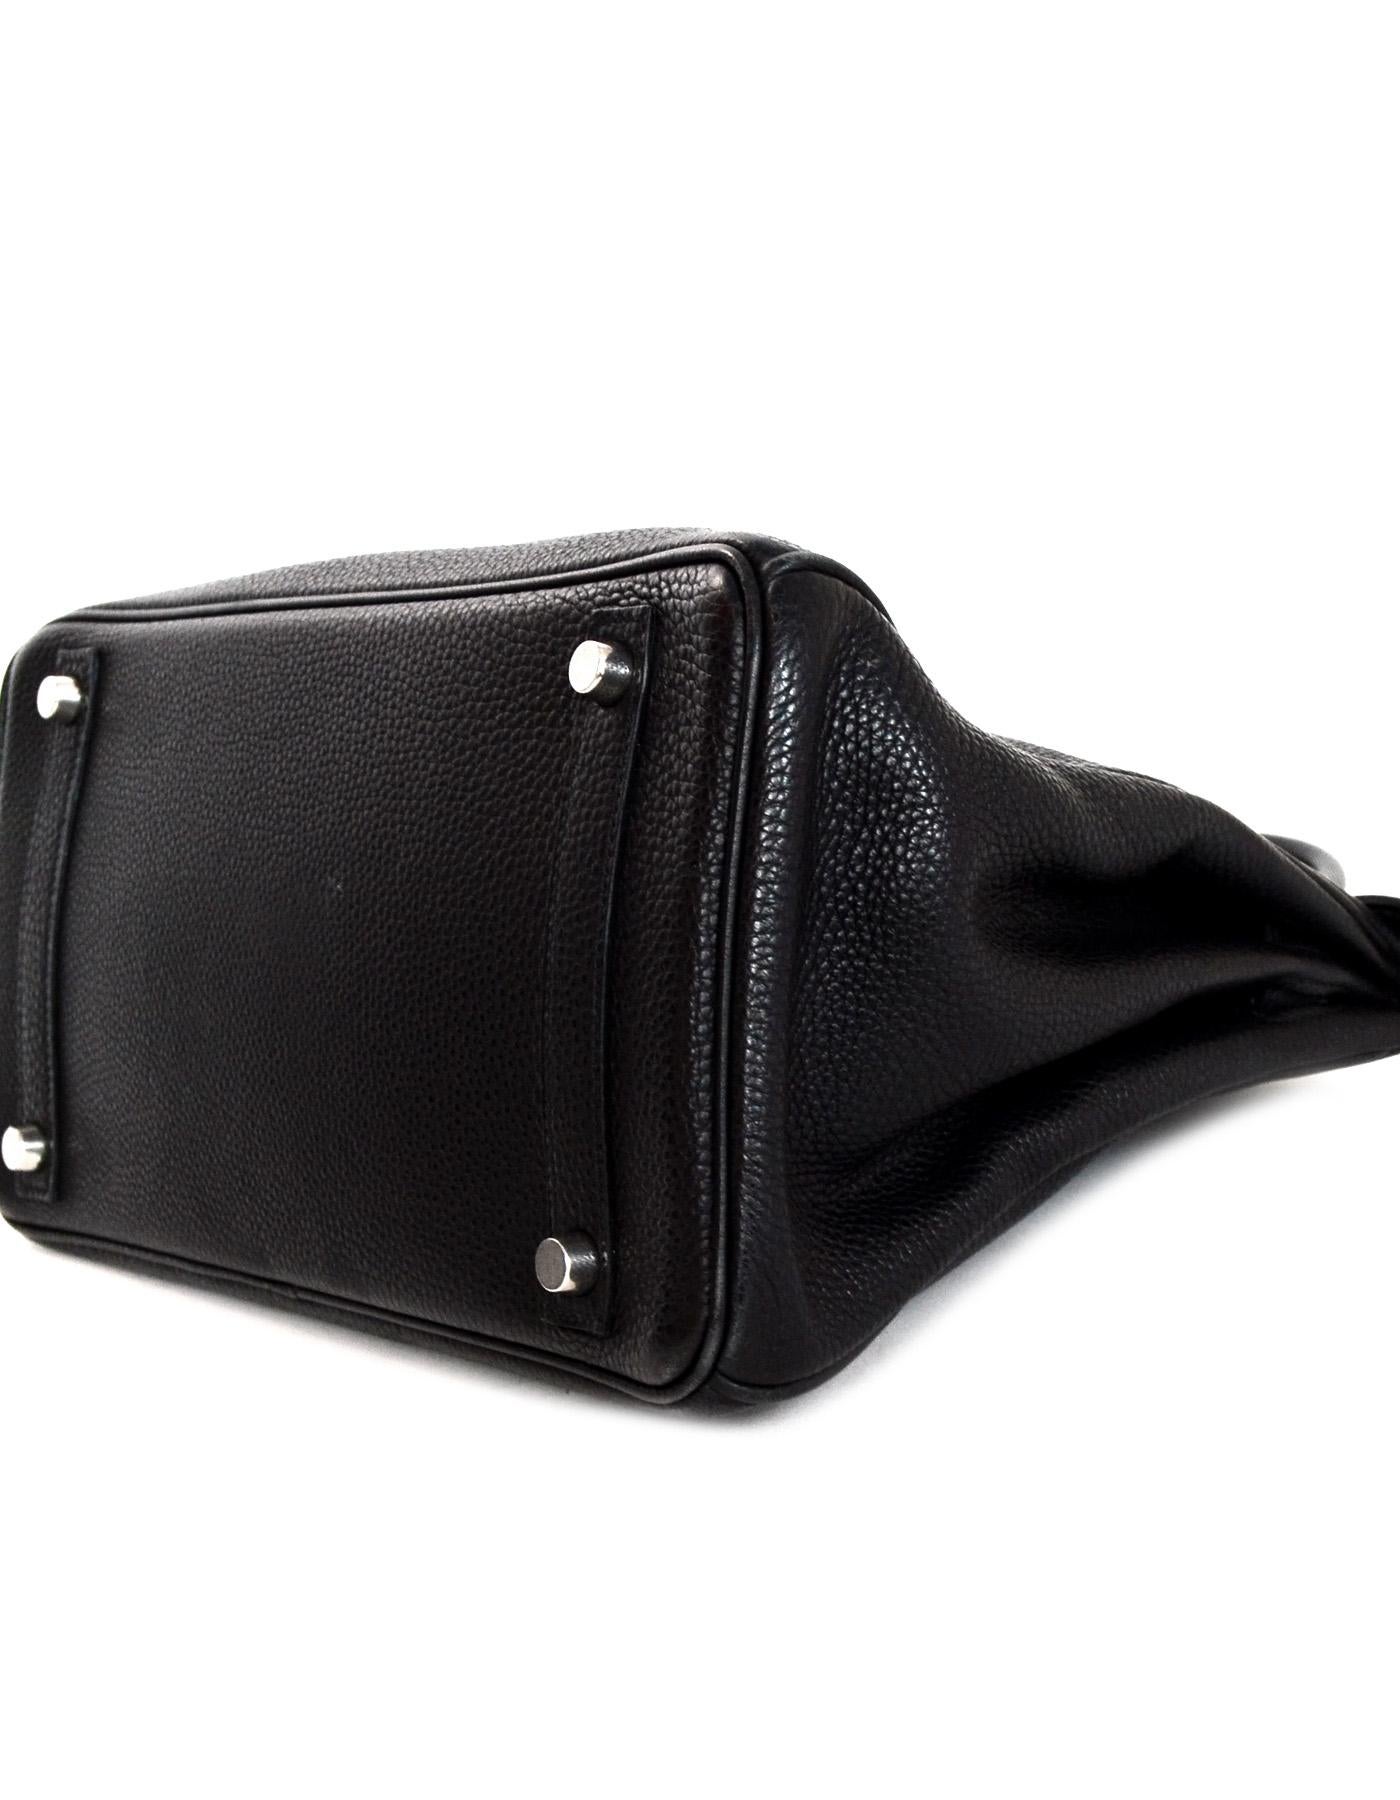 Hermes Black Togo Leather 30CM Birkin Bag w. Palladium/Silvertone Hardware 3